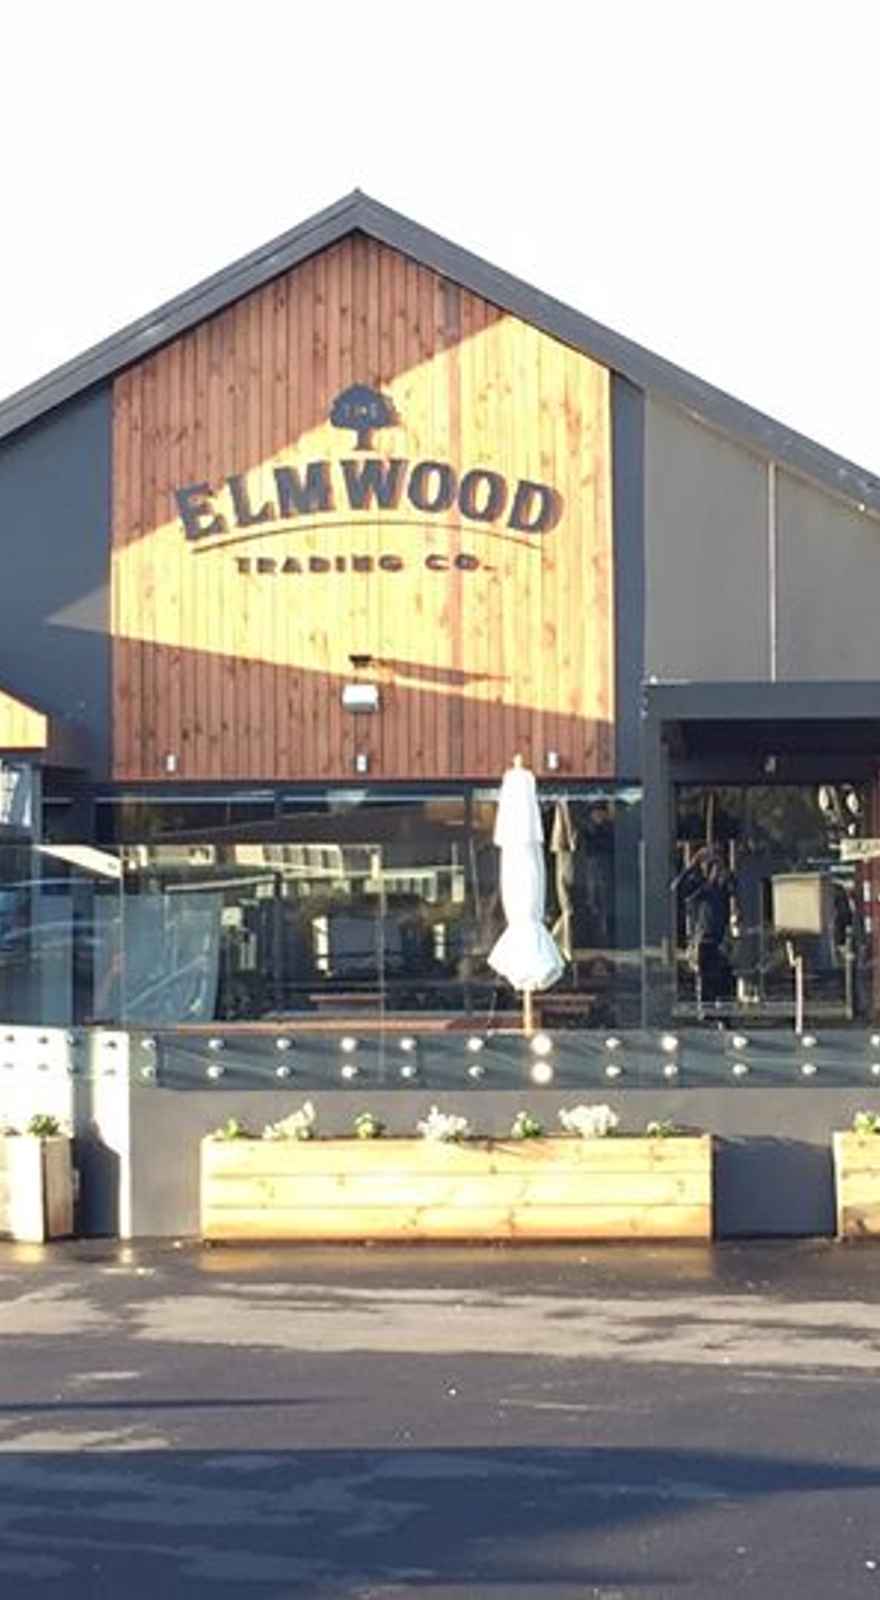 The Elmwood Trading Company